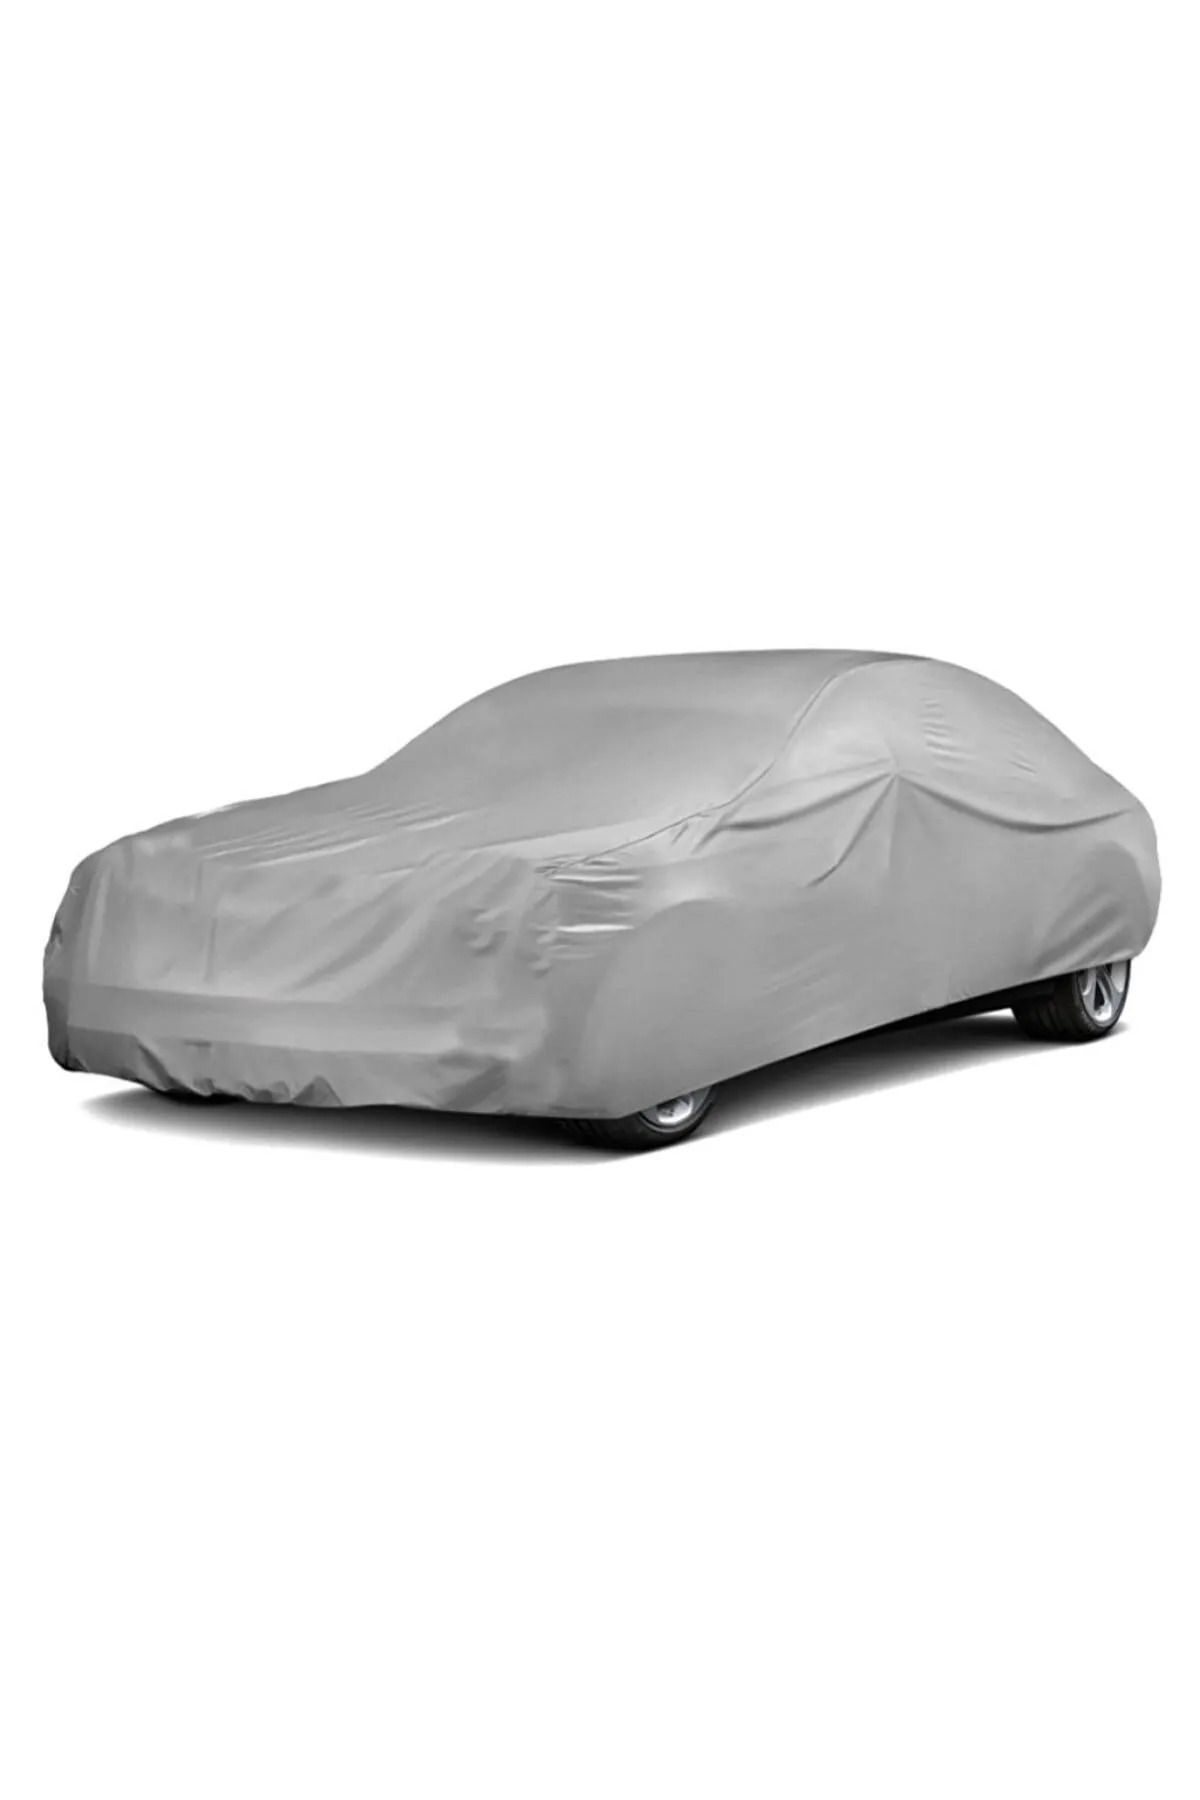 PlusOto Kia Stonic Compatible Car Tarpaulin, Vehicle Cover, Tent